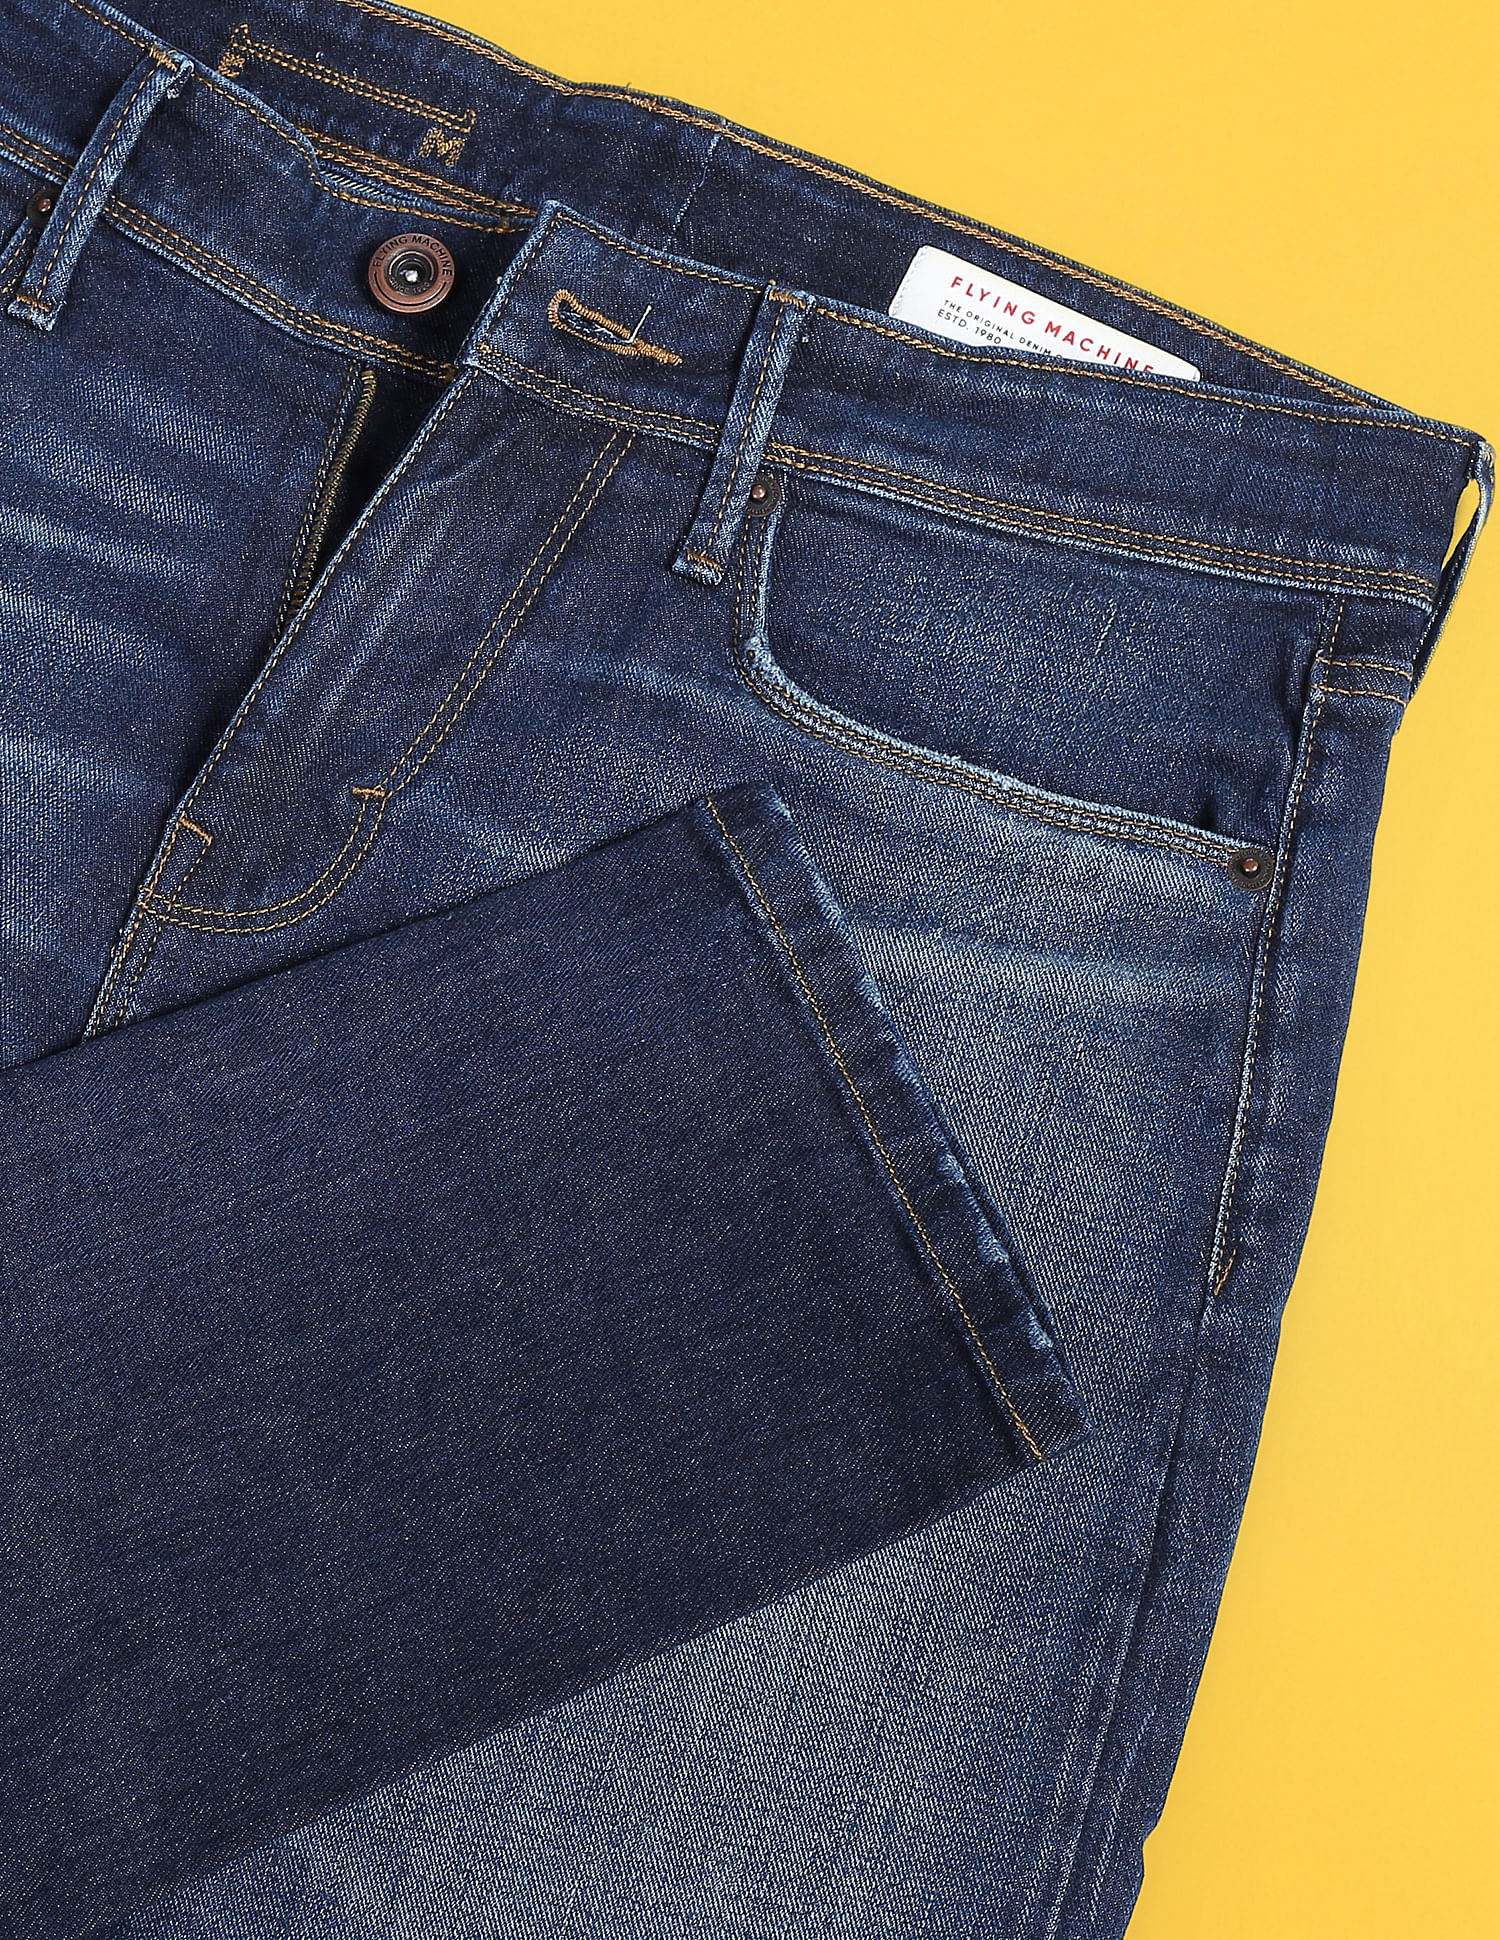 Vintage fu's by jean machine denim jeans | Denim jeans shop, Jean machine, Denim  jeans